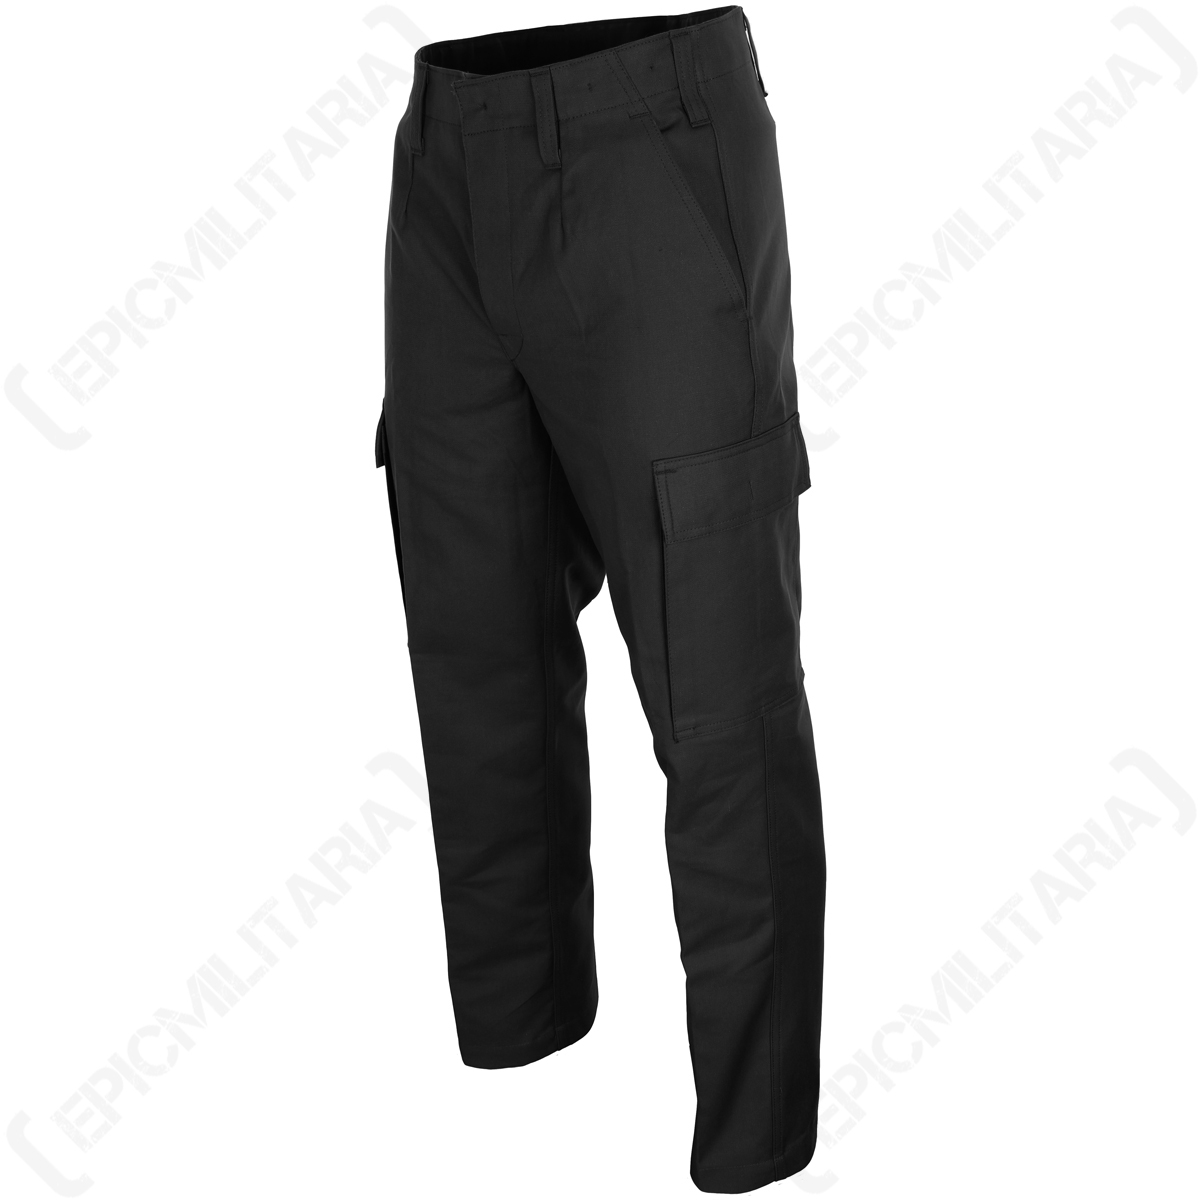 Top more than 140 black moleskin trousers best - camera.edu.vn